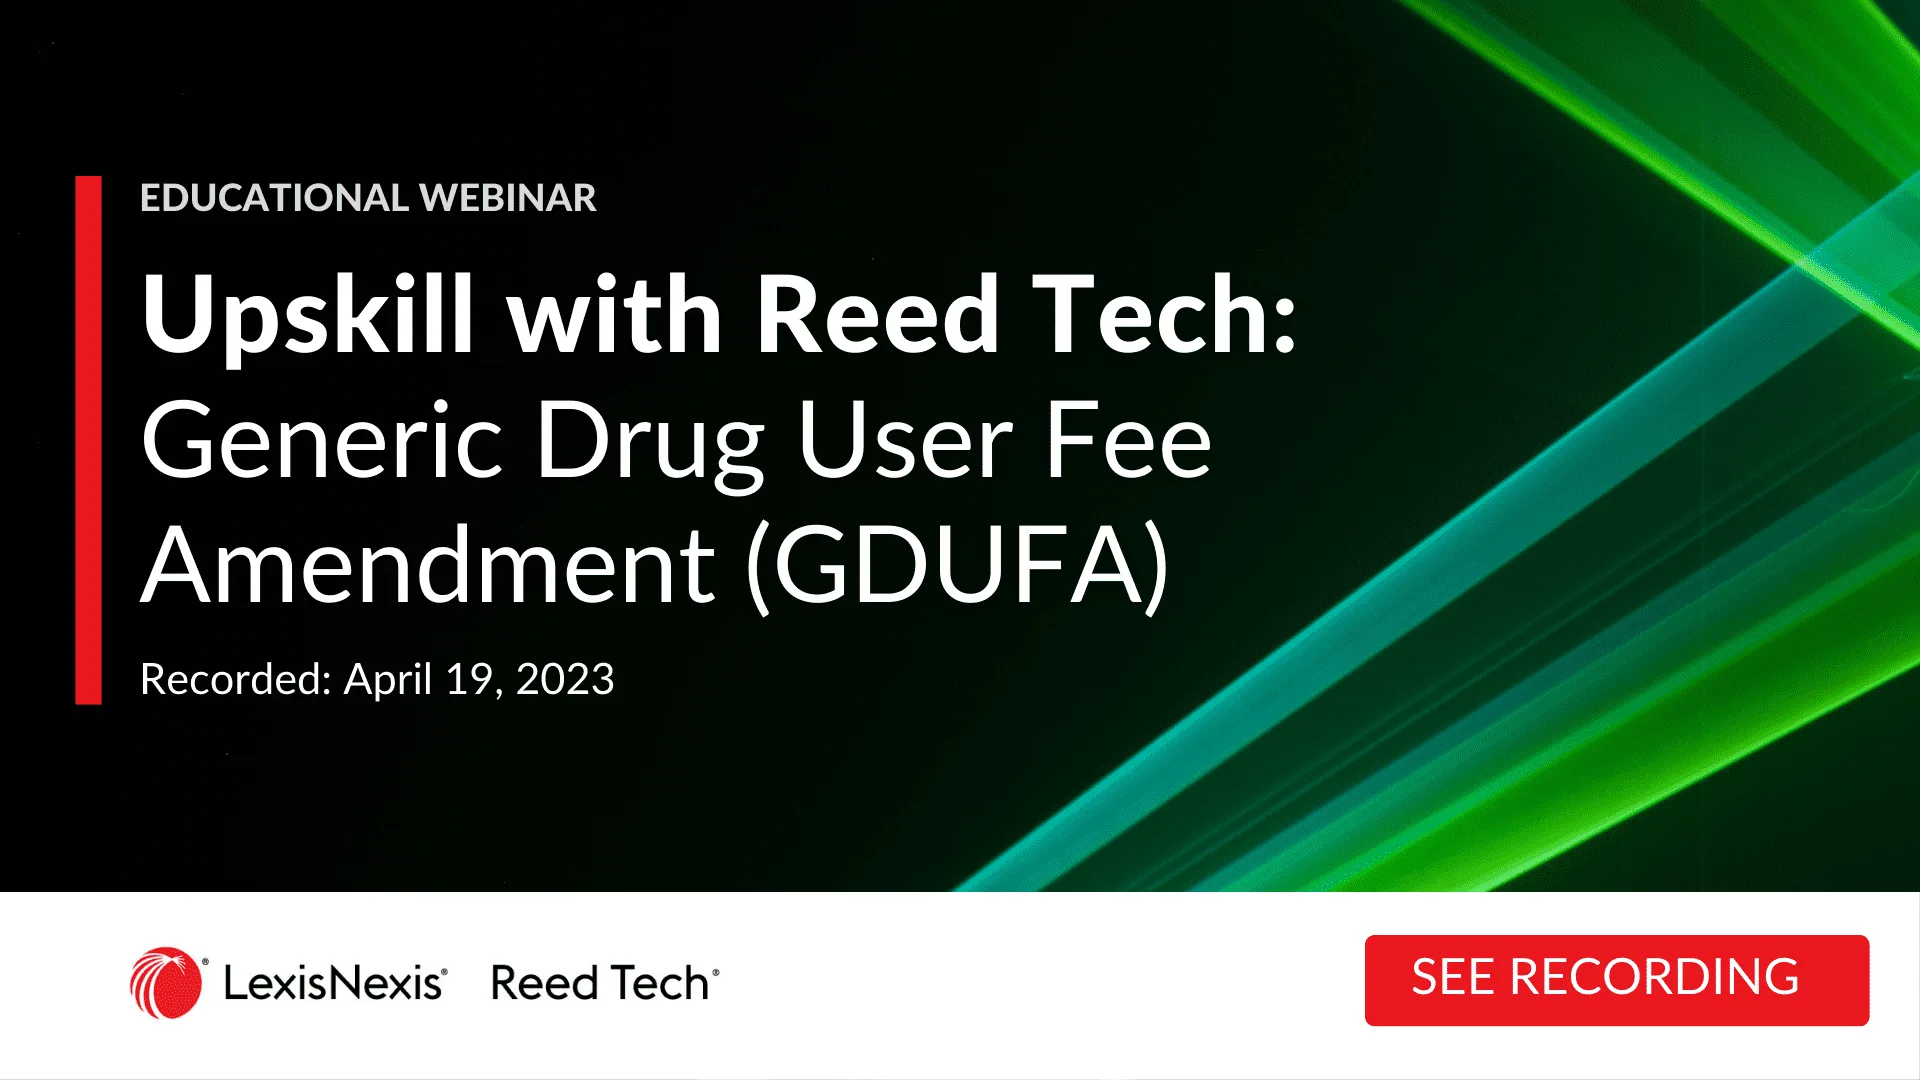 Upskill with Reed Tech: GDUFA